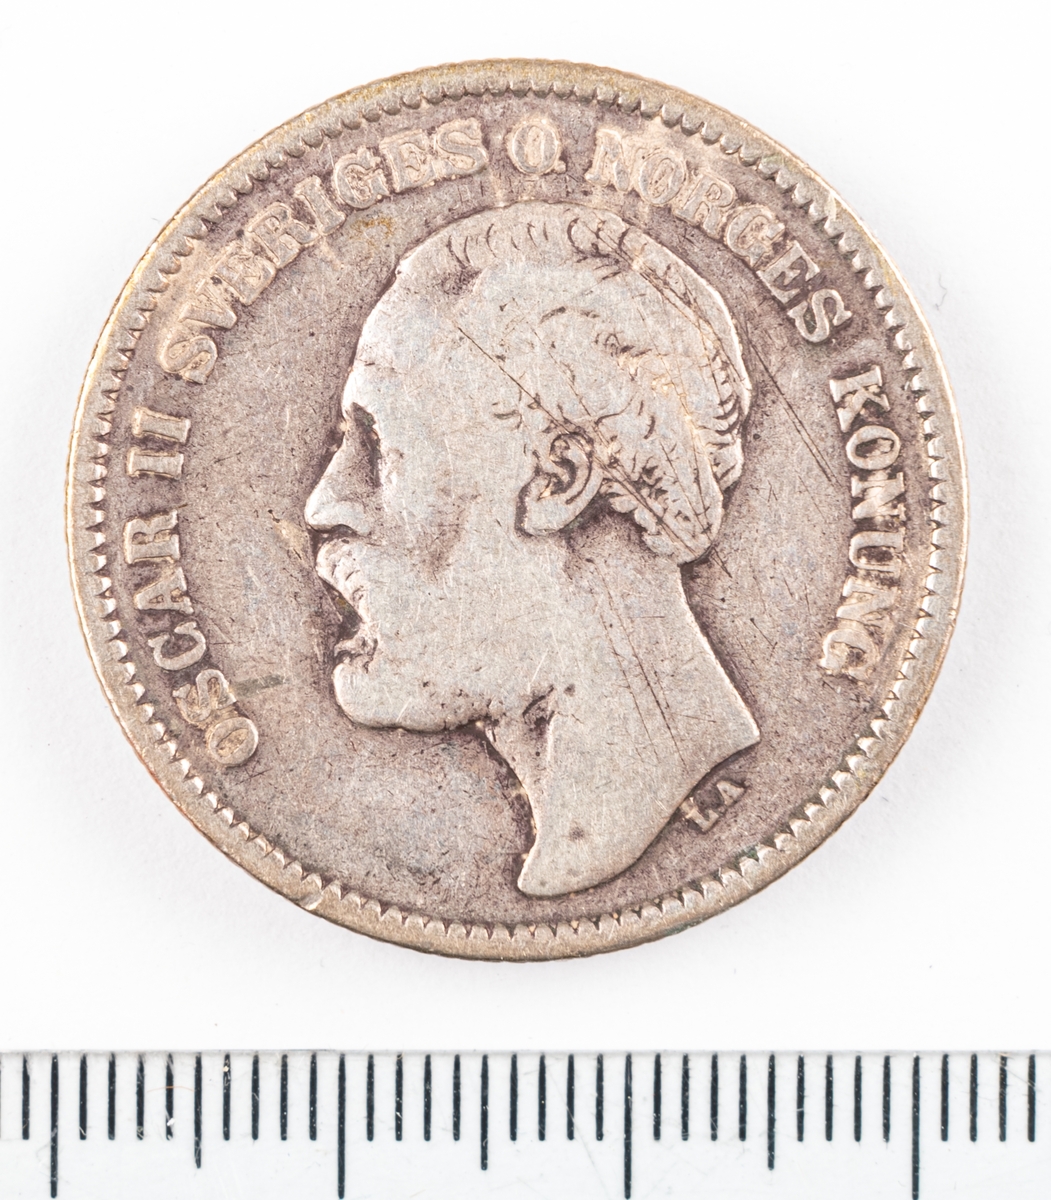 Mynt, Sverige, 2 kronor, 1877.